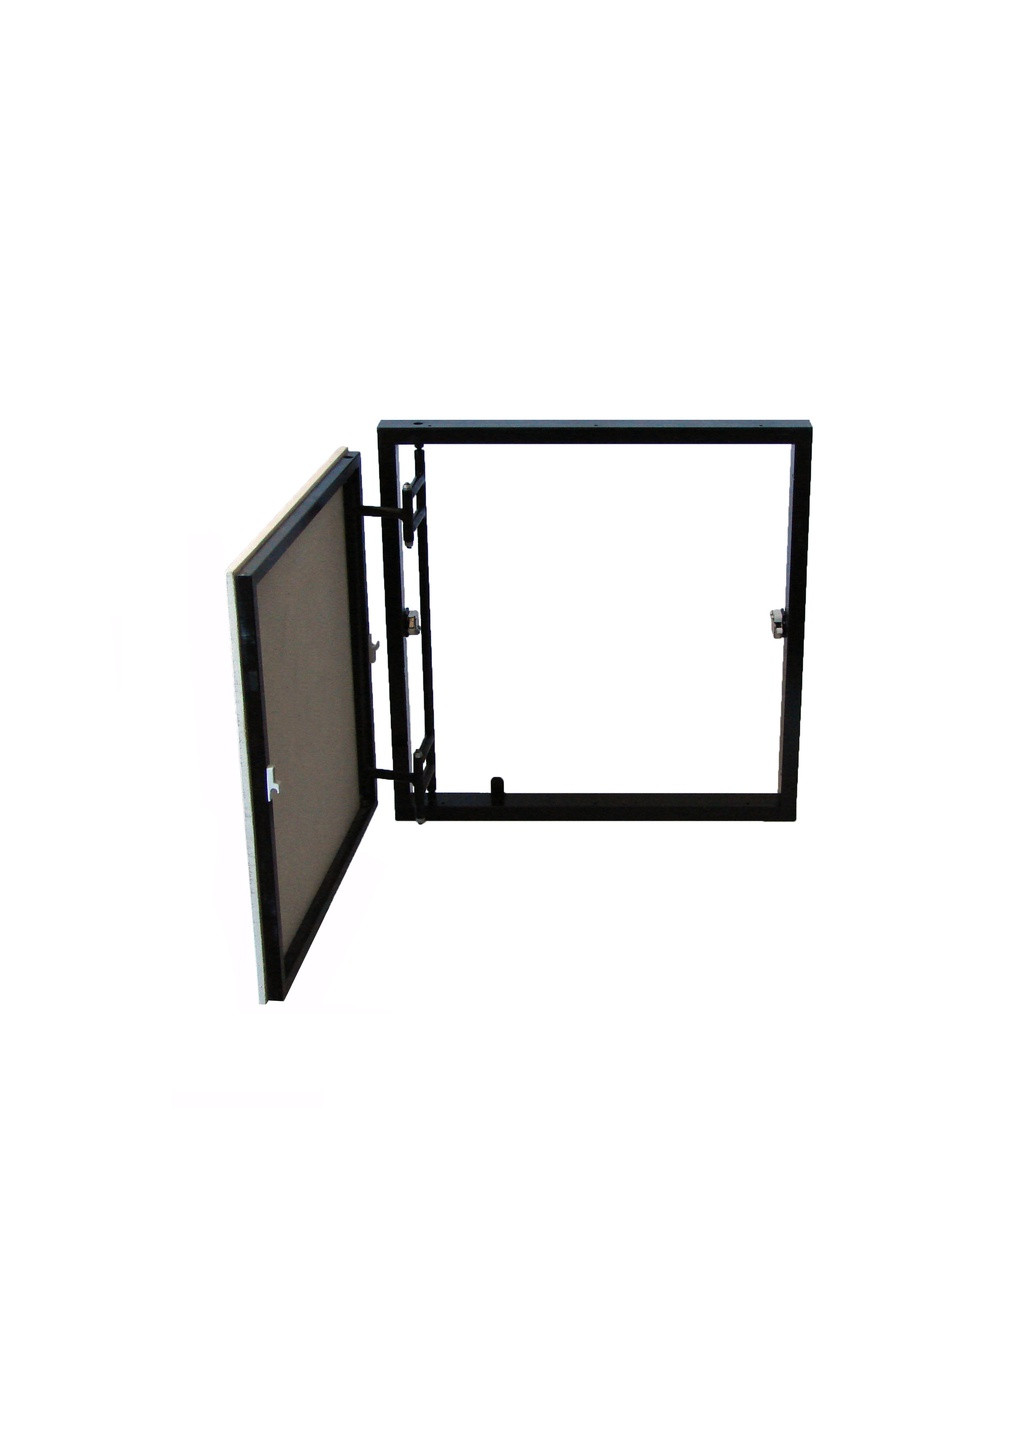 Ревизионный люк скрытого монтажа под плитку нажимного типа 600x600 ревизионная дверца для плитки (1109) S-Dom (264208738)